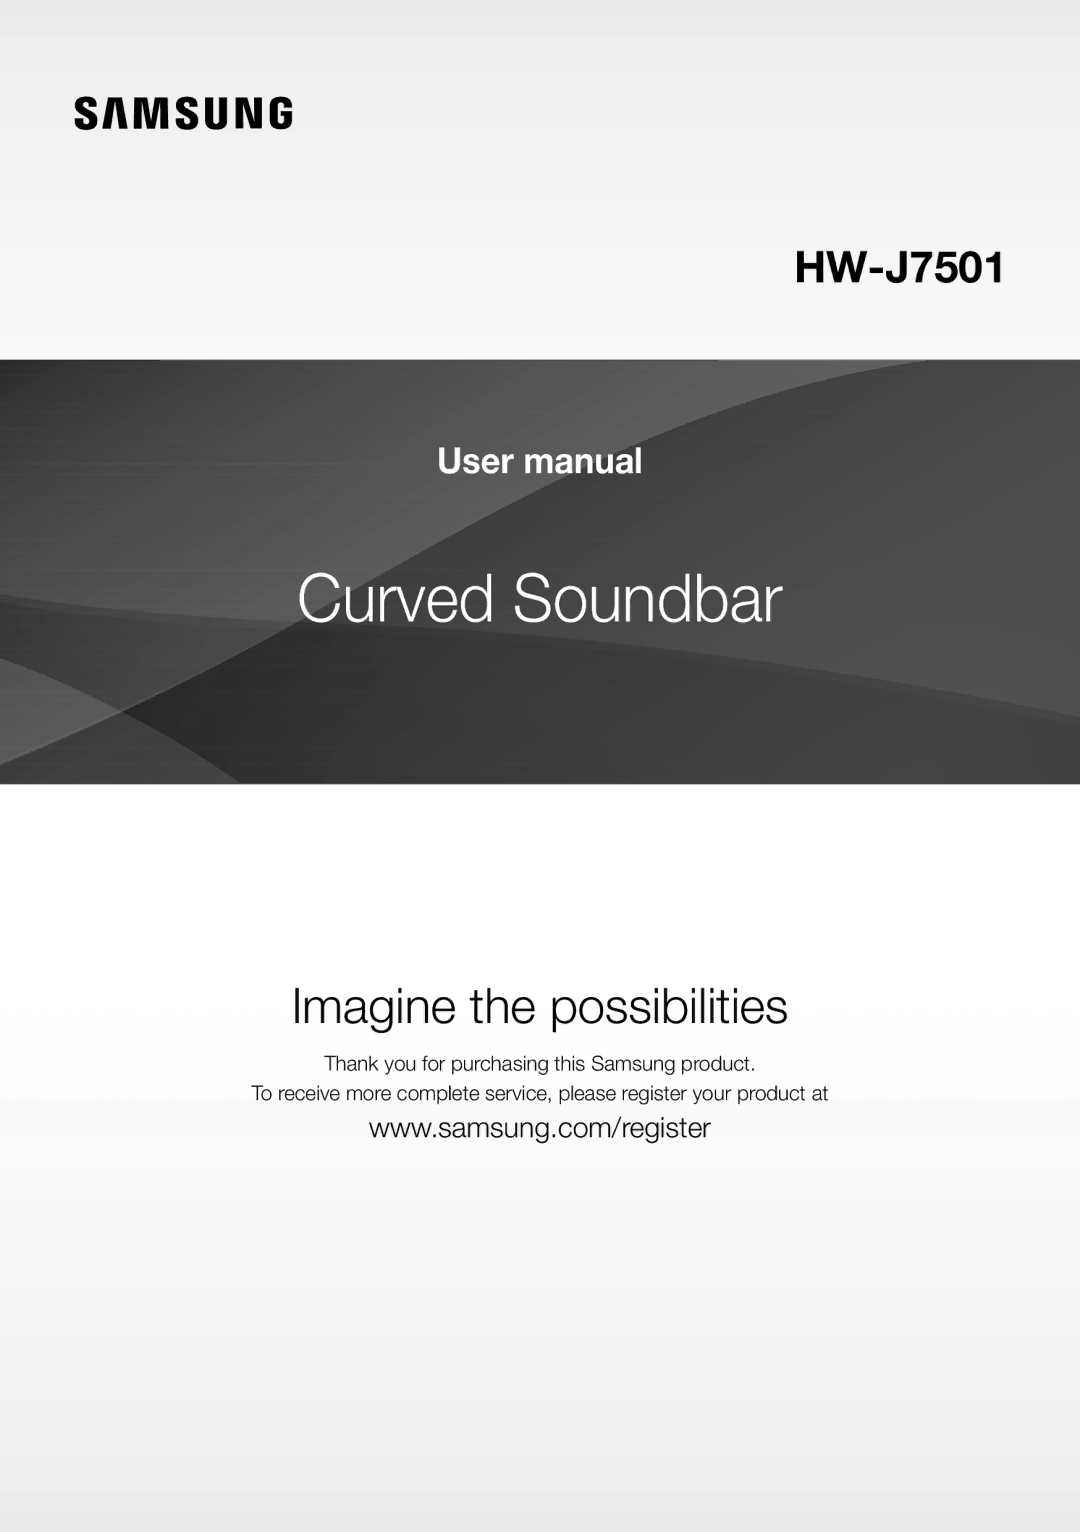 Samsung HW-J7501/XV manual Curved Soundbar 